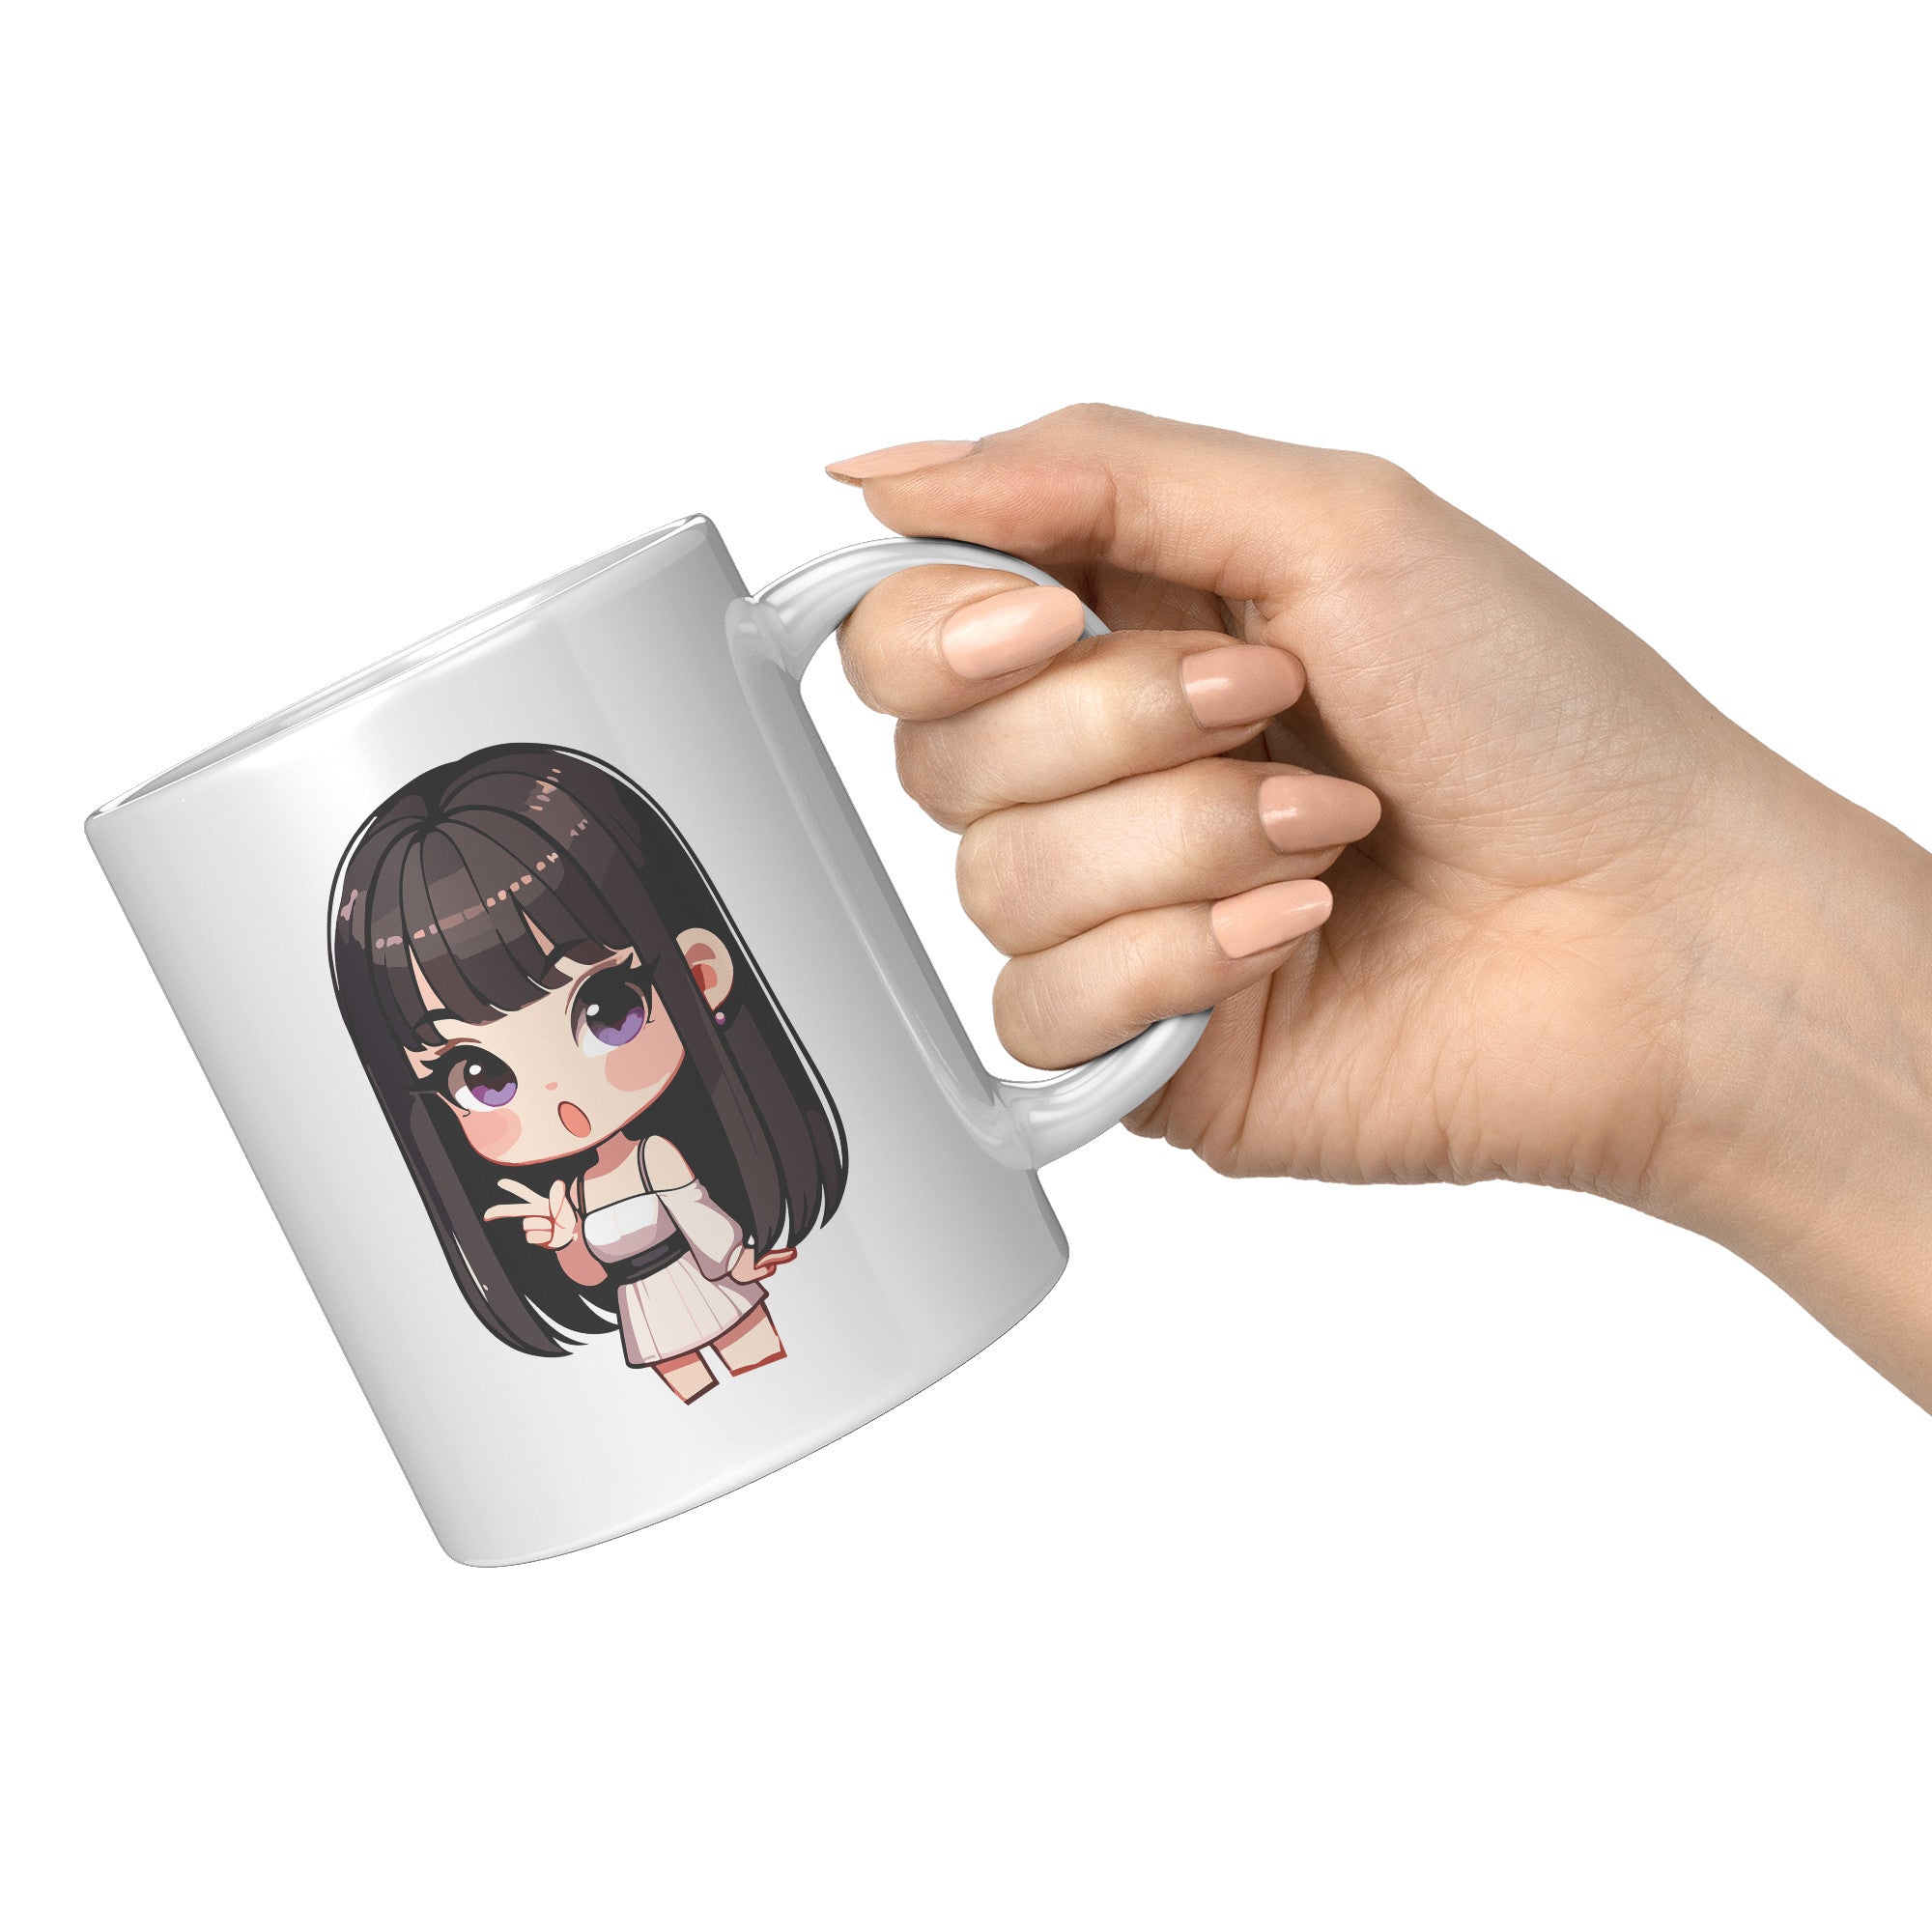 "Marites Gossip Queen Coffee Mug - Cute Cartoon 'Ano Ang Latest?' Cup - Perfect Chismosa Gift - Filipino Slang Tea Mug" - Q